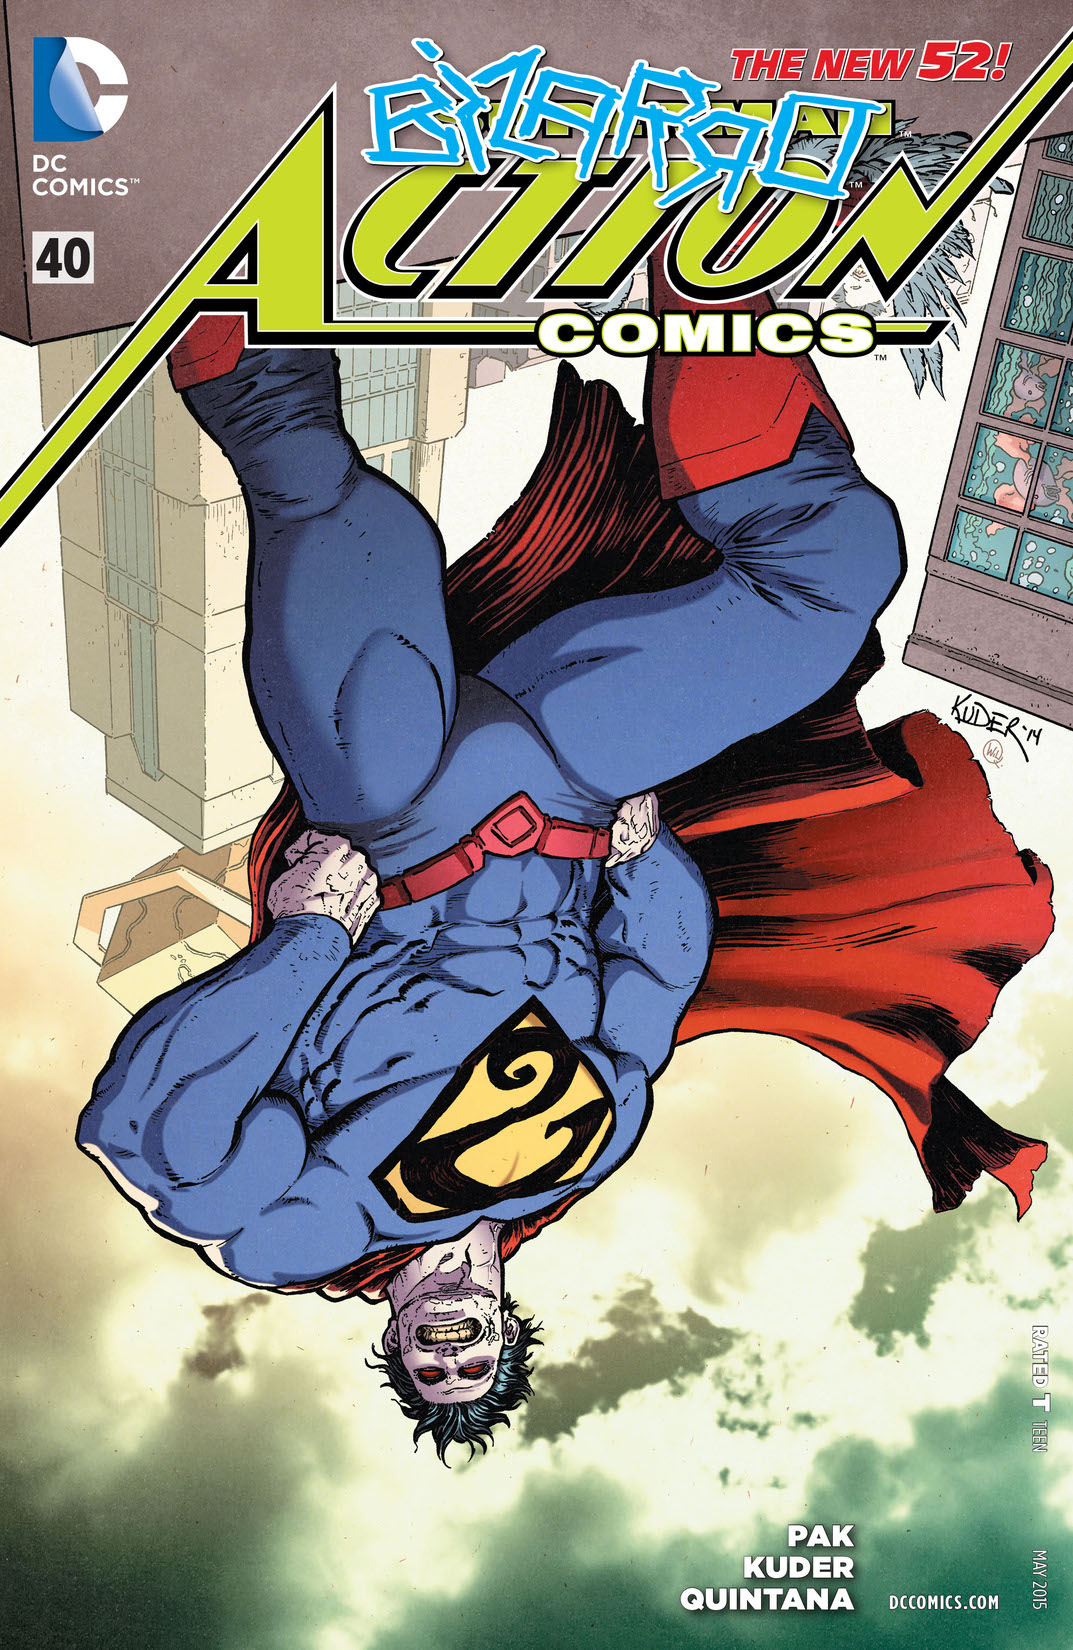 Action Comics (2011-) #40 preview images